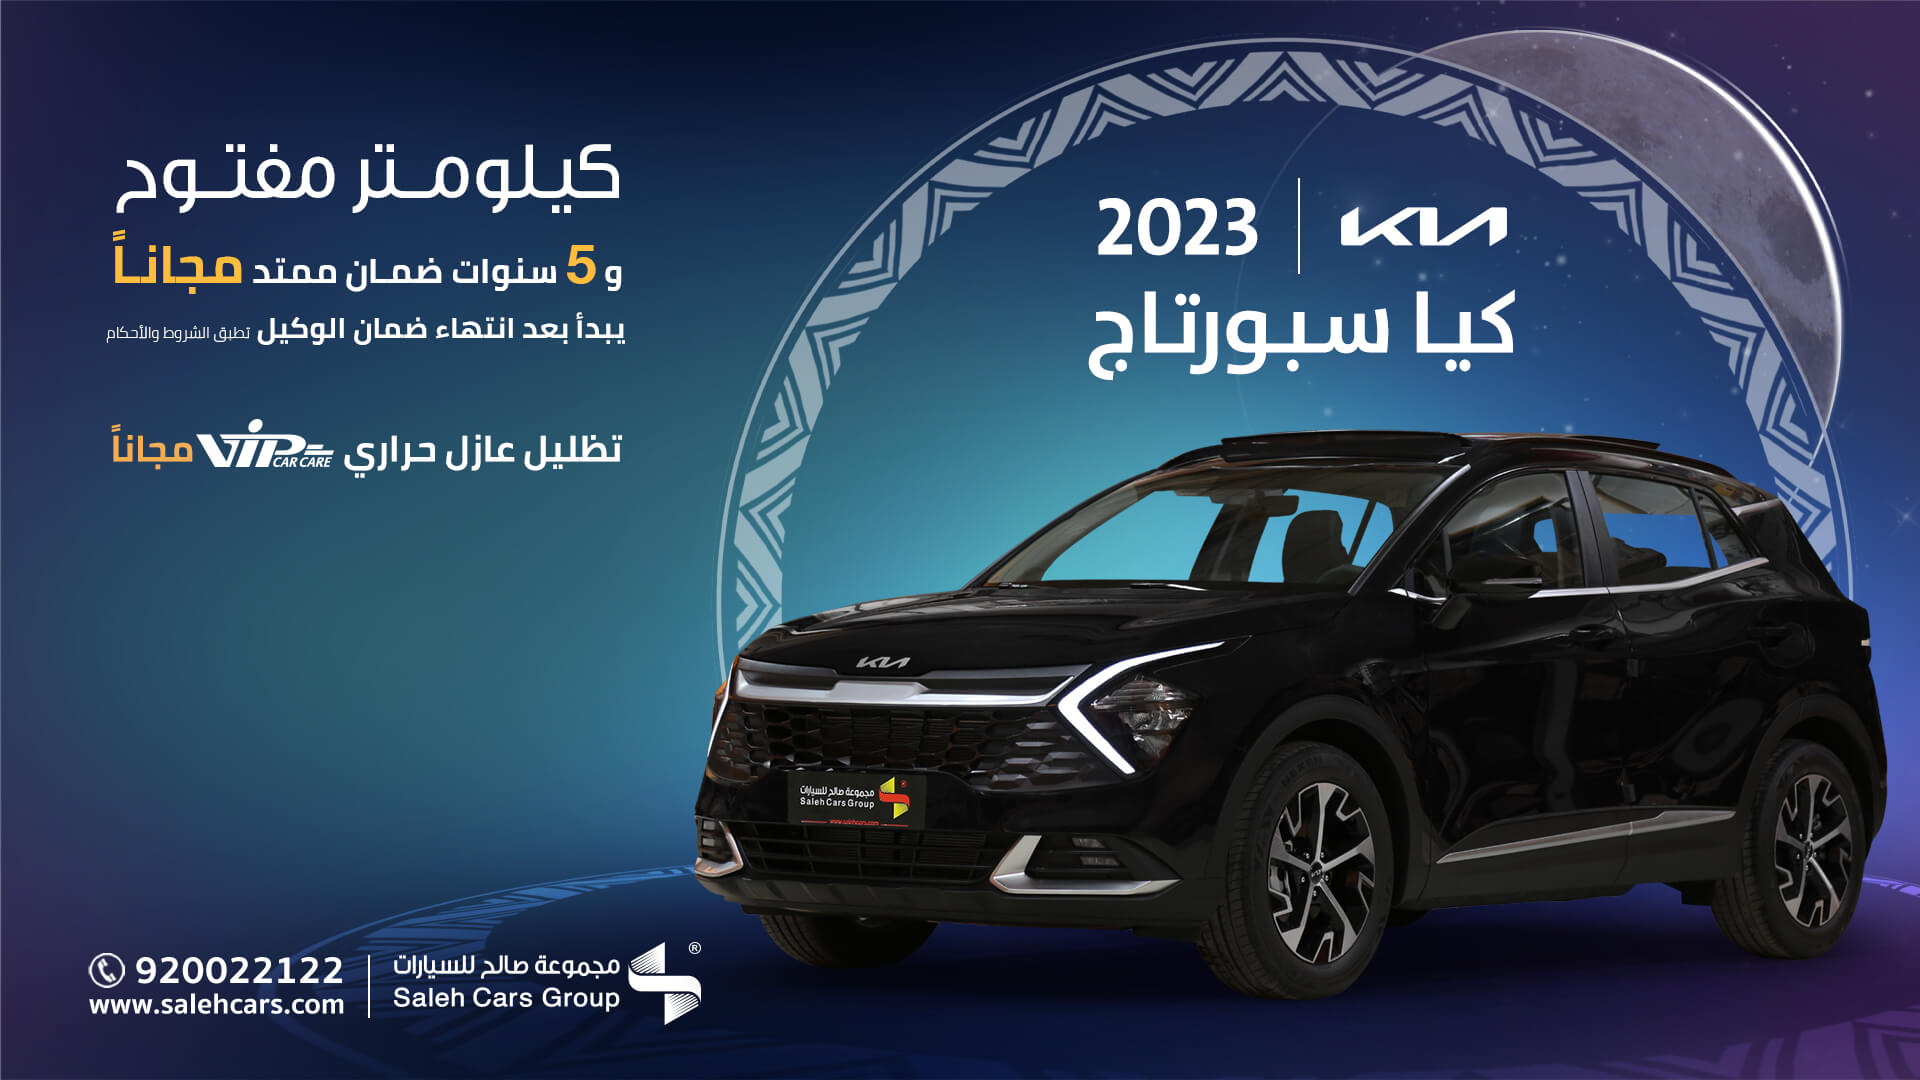 Kia Abdullah Saleh cars offer for Ramadan 1444